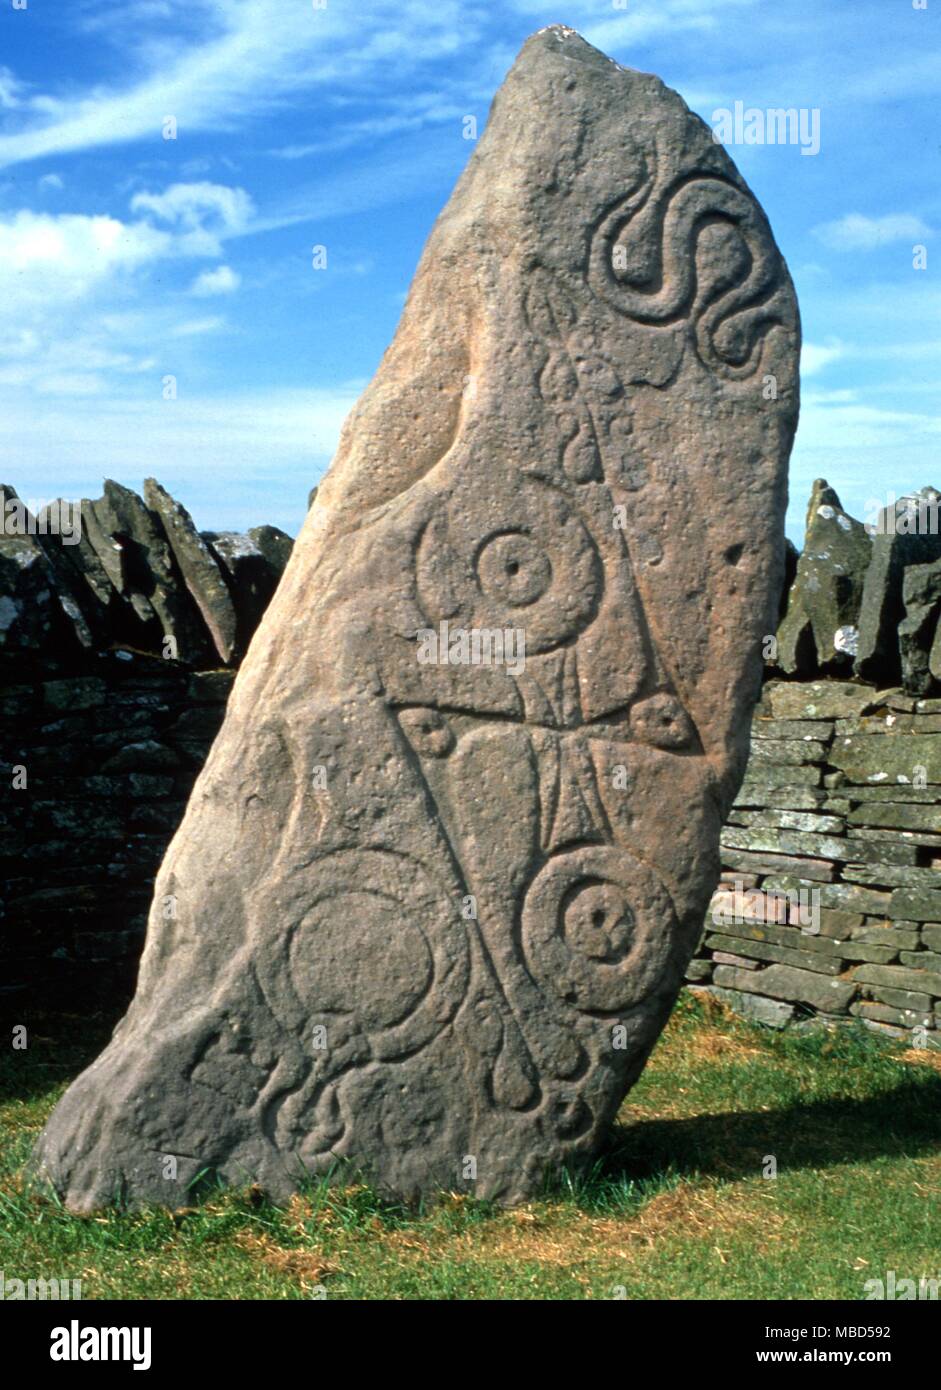 Pictish. Monolito inscrito con símbolos de Pictish en la carretera cerca de Aberlemno, Escocia. Foto de stock